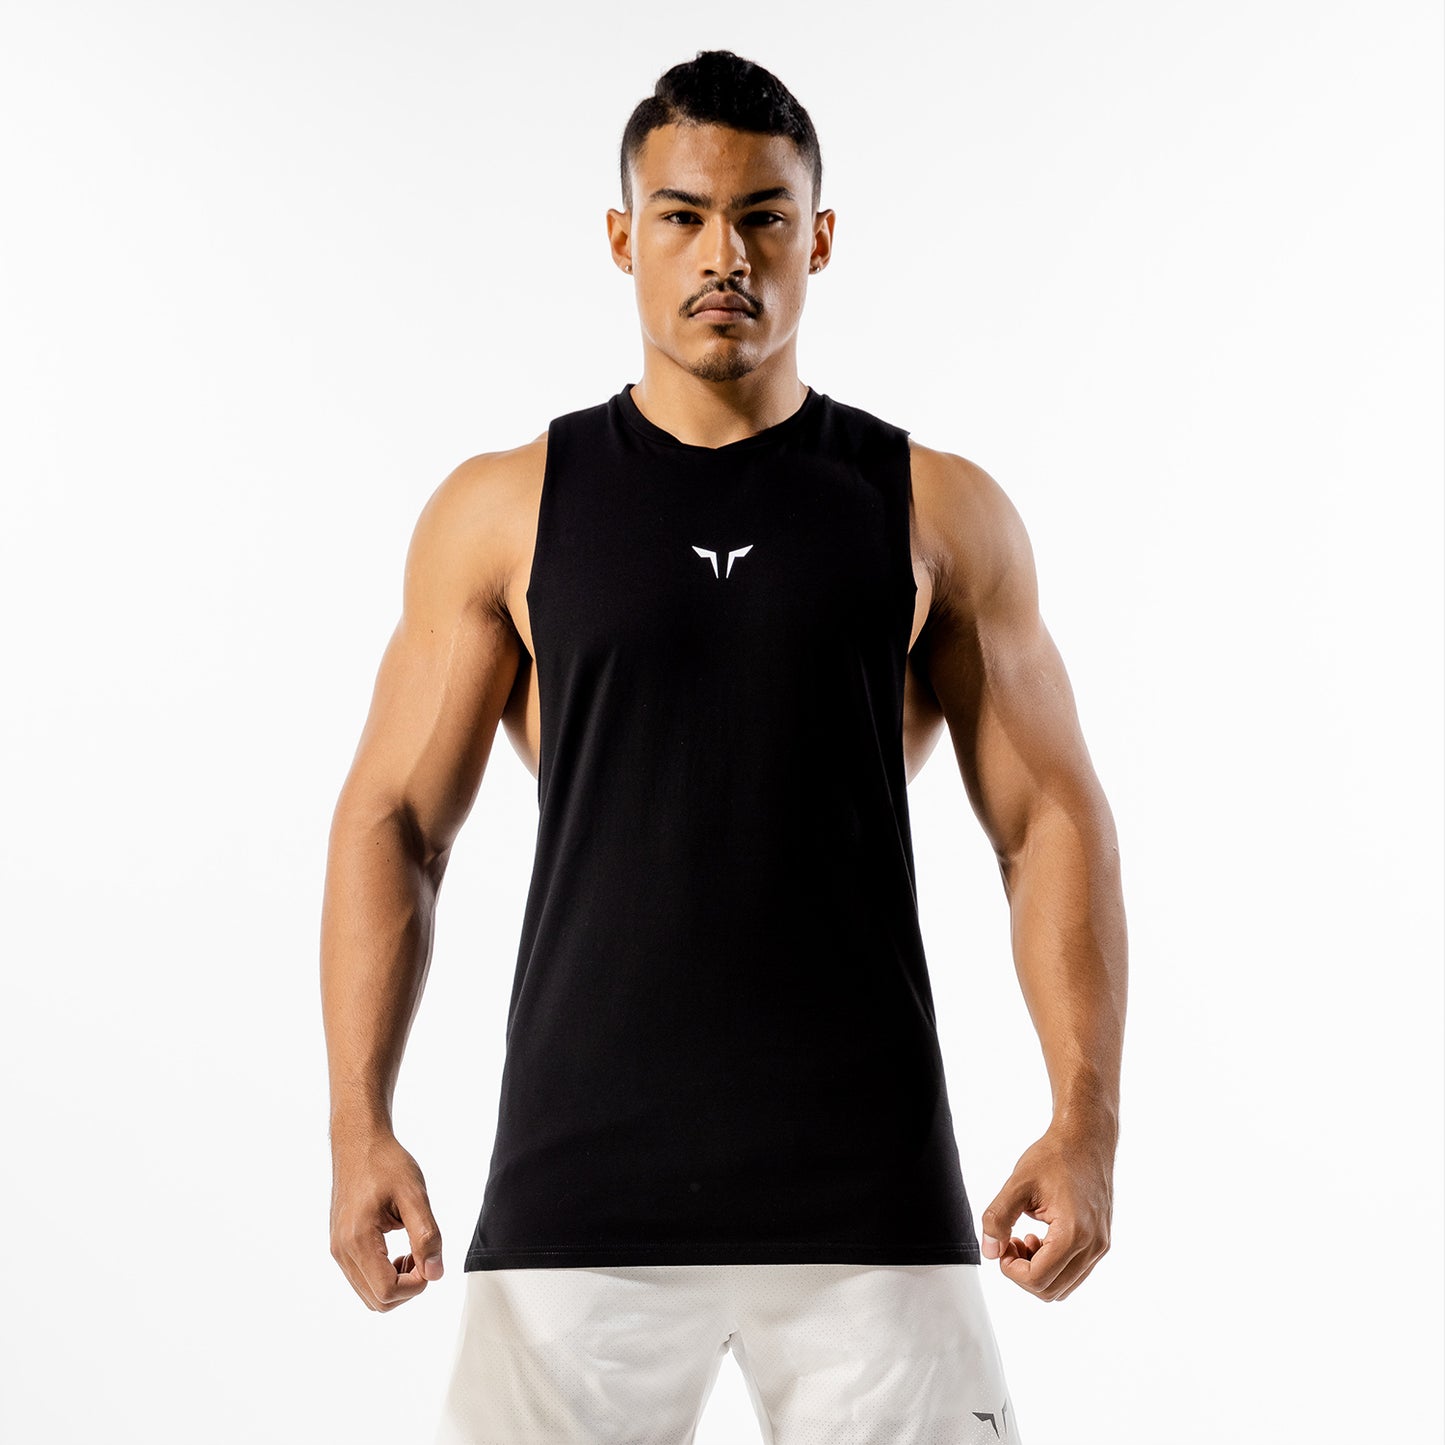 squatwolf-gym-wear-core-tank-black-workout-tank-tops-for-men